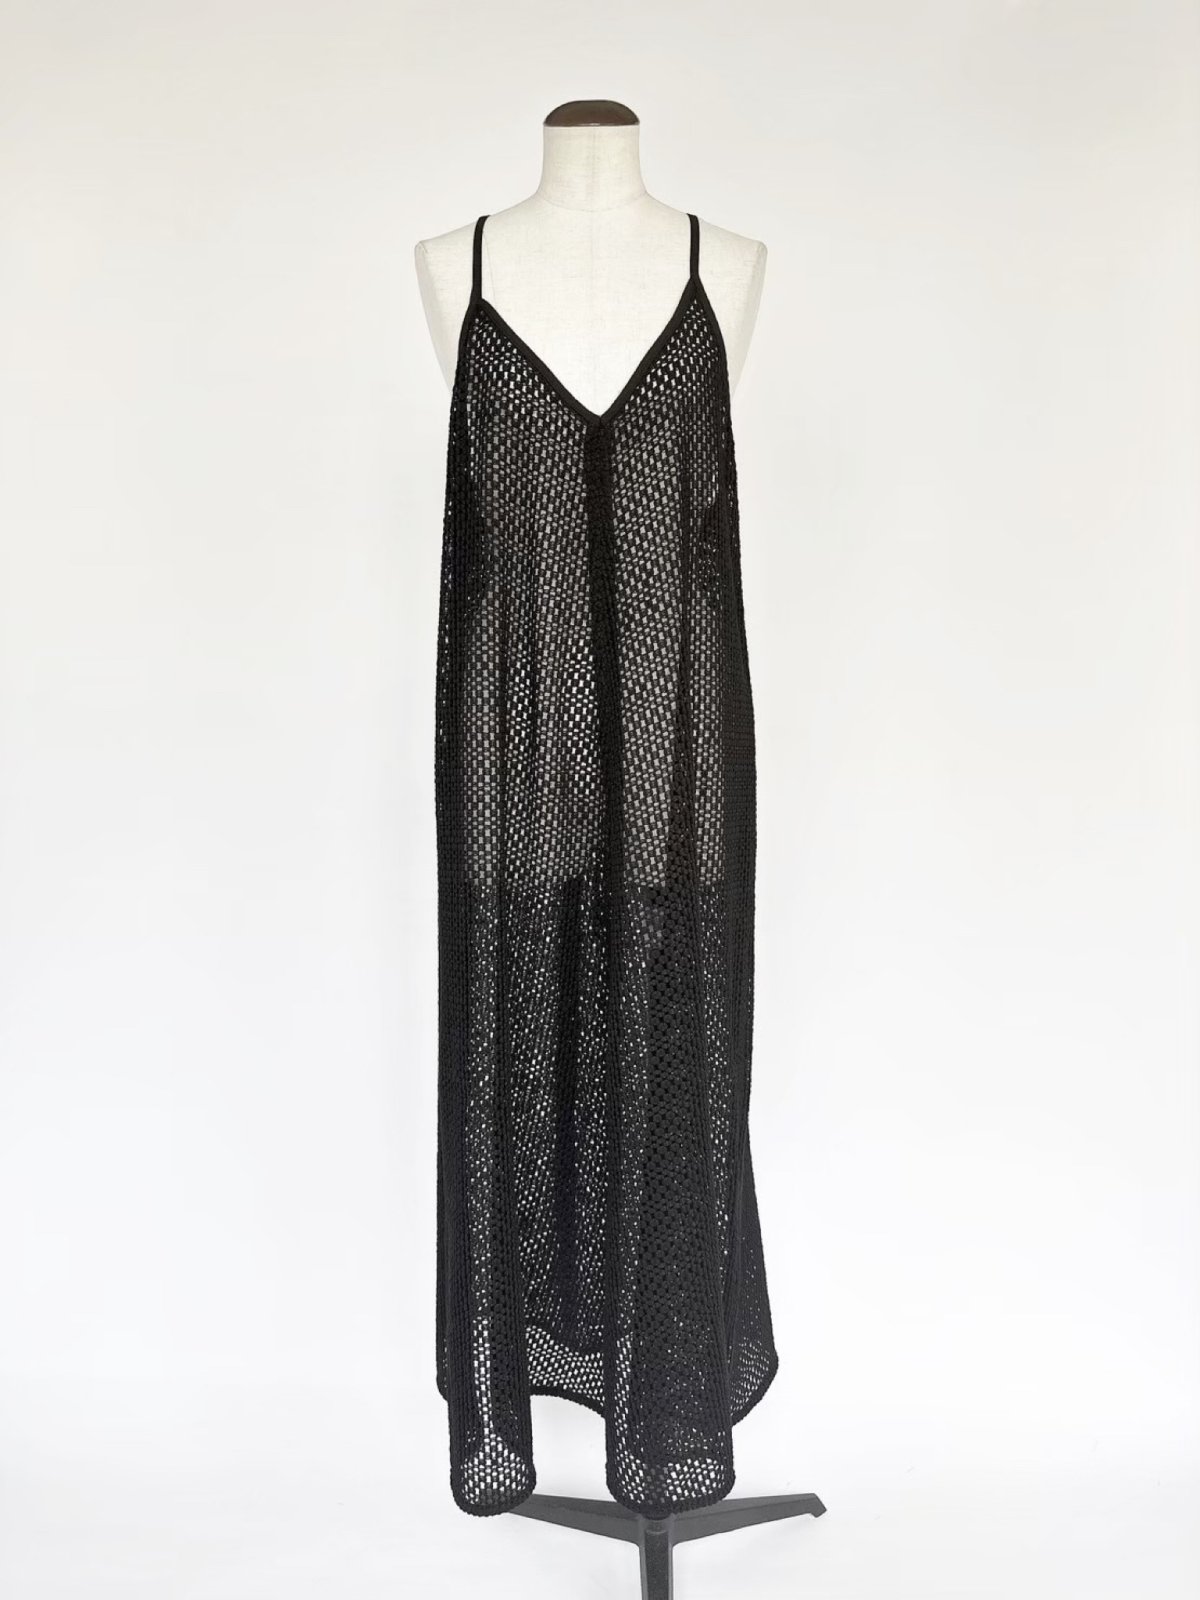 Mesh knit camisole dress / black